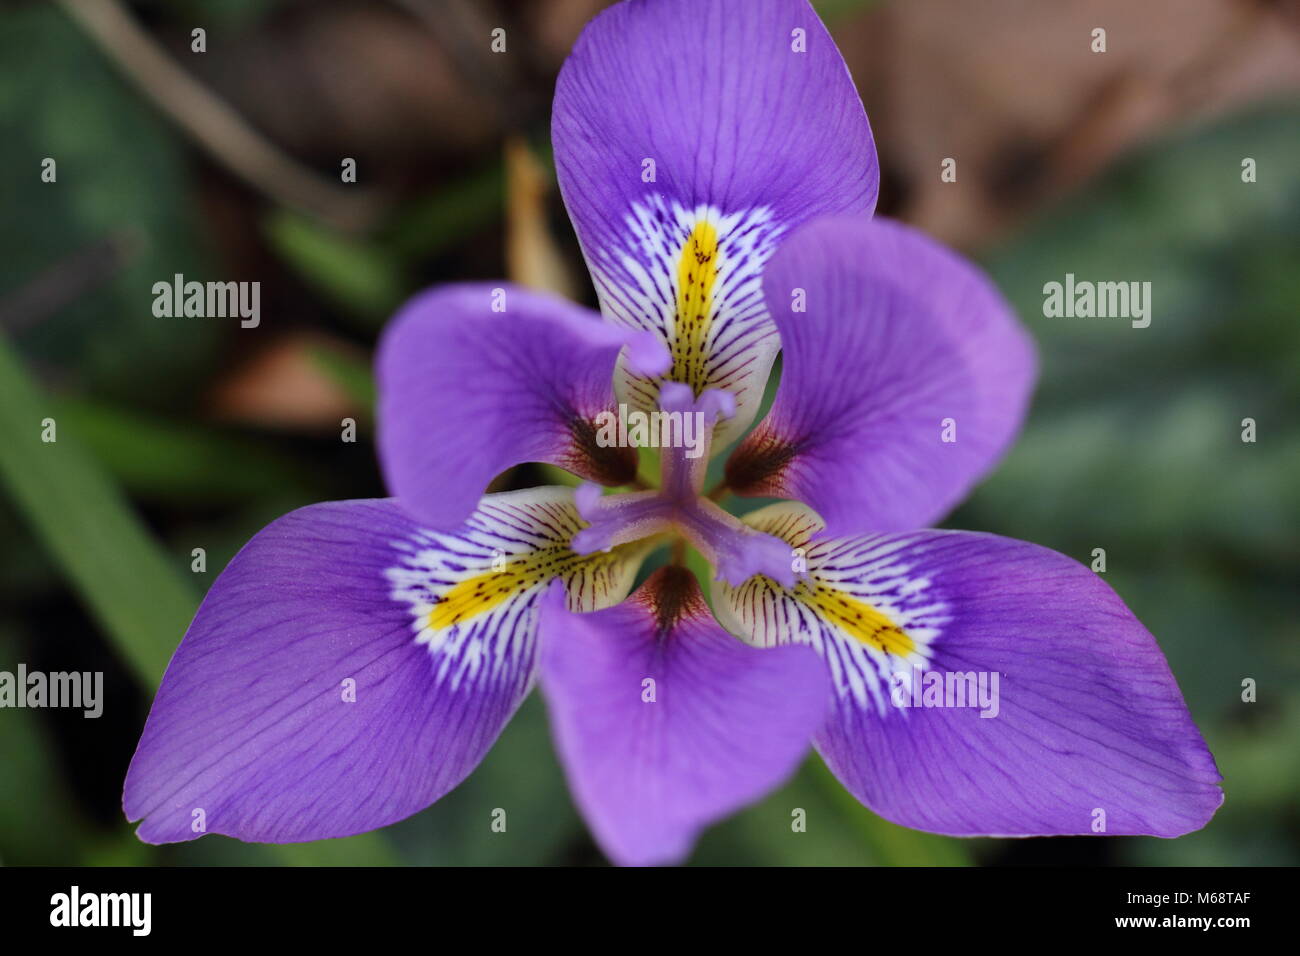 Fioriture di Algerini (iris Iris unguicularis), in un giardino d'inverno, febbraio, REGNO UNITO Foto Stock